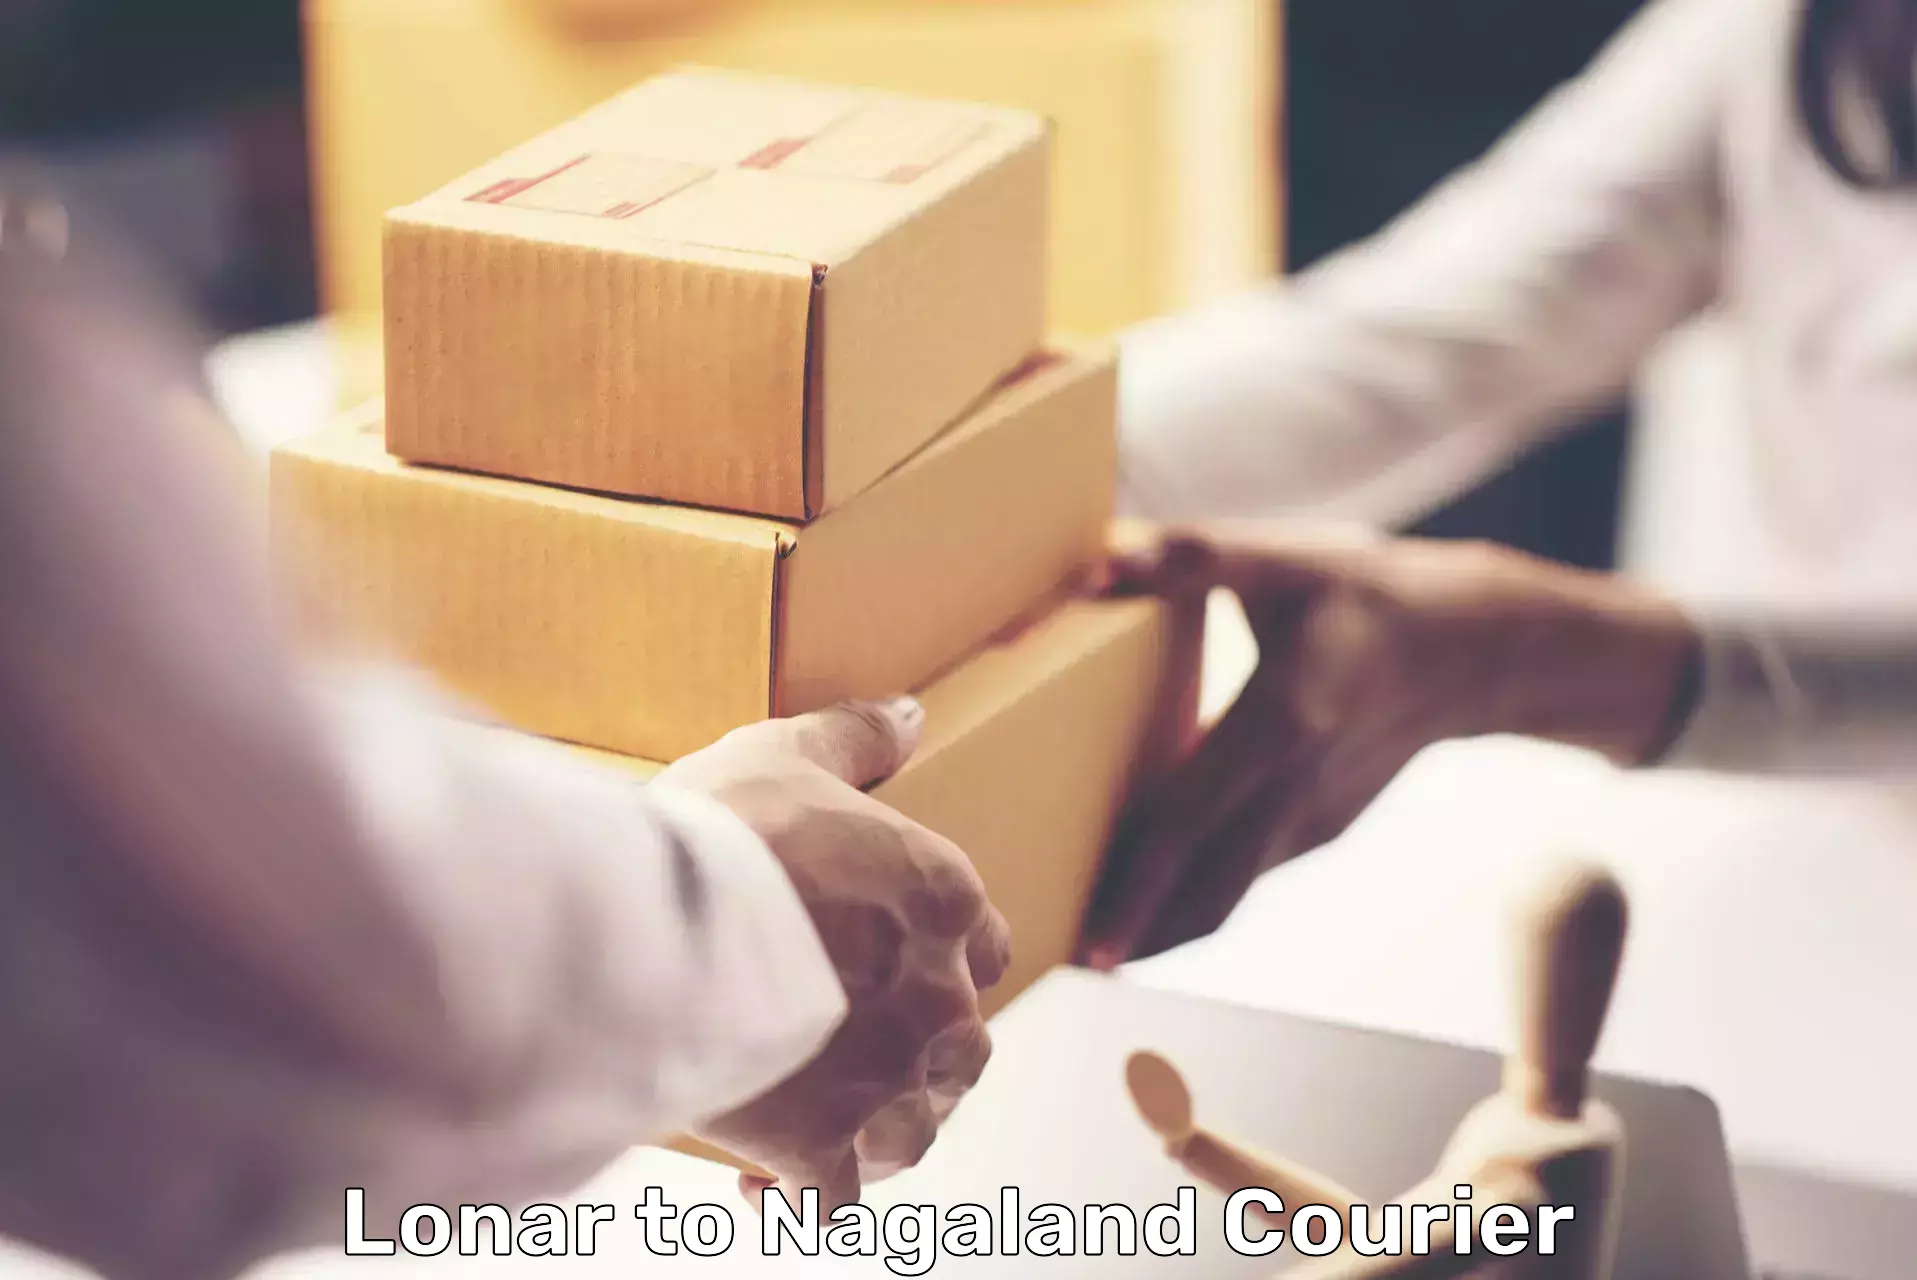 Bulk courier orders Lonar to Nagaland